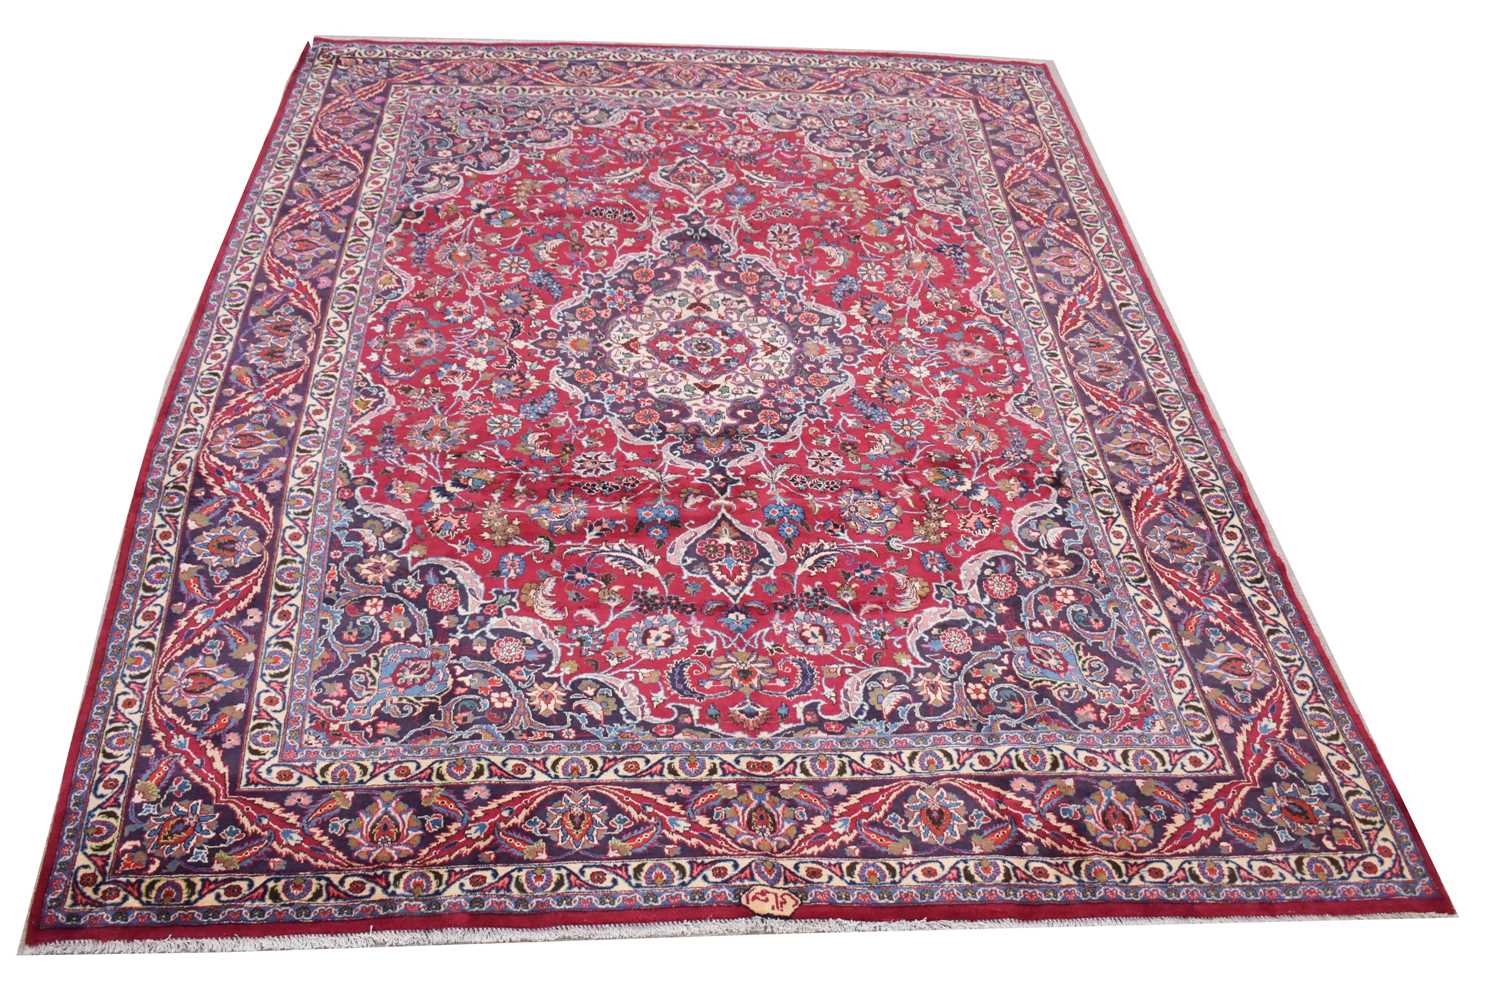 Lot 550 - Mashad carpet